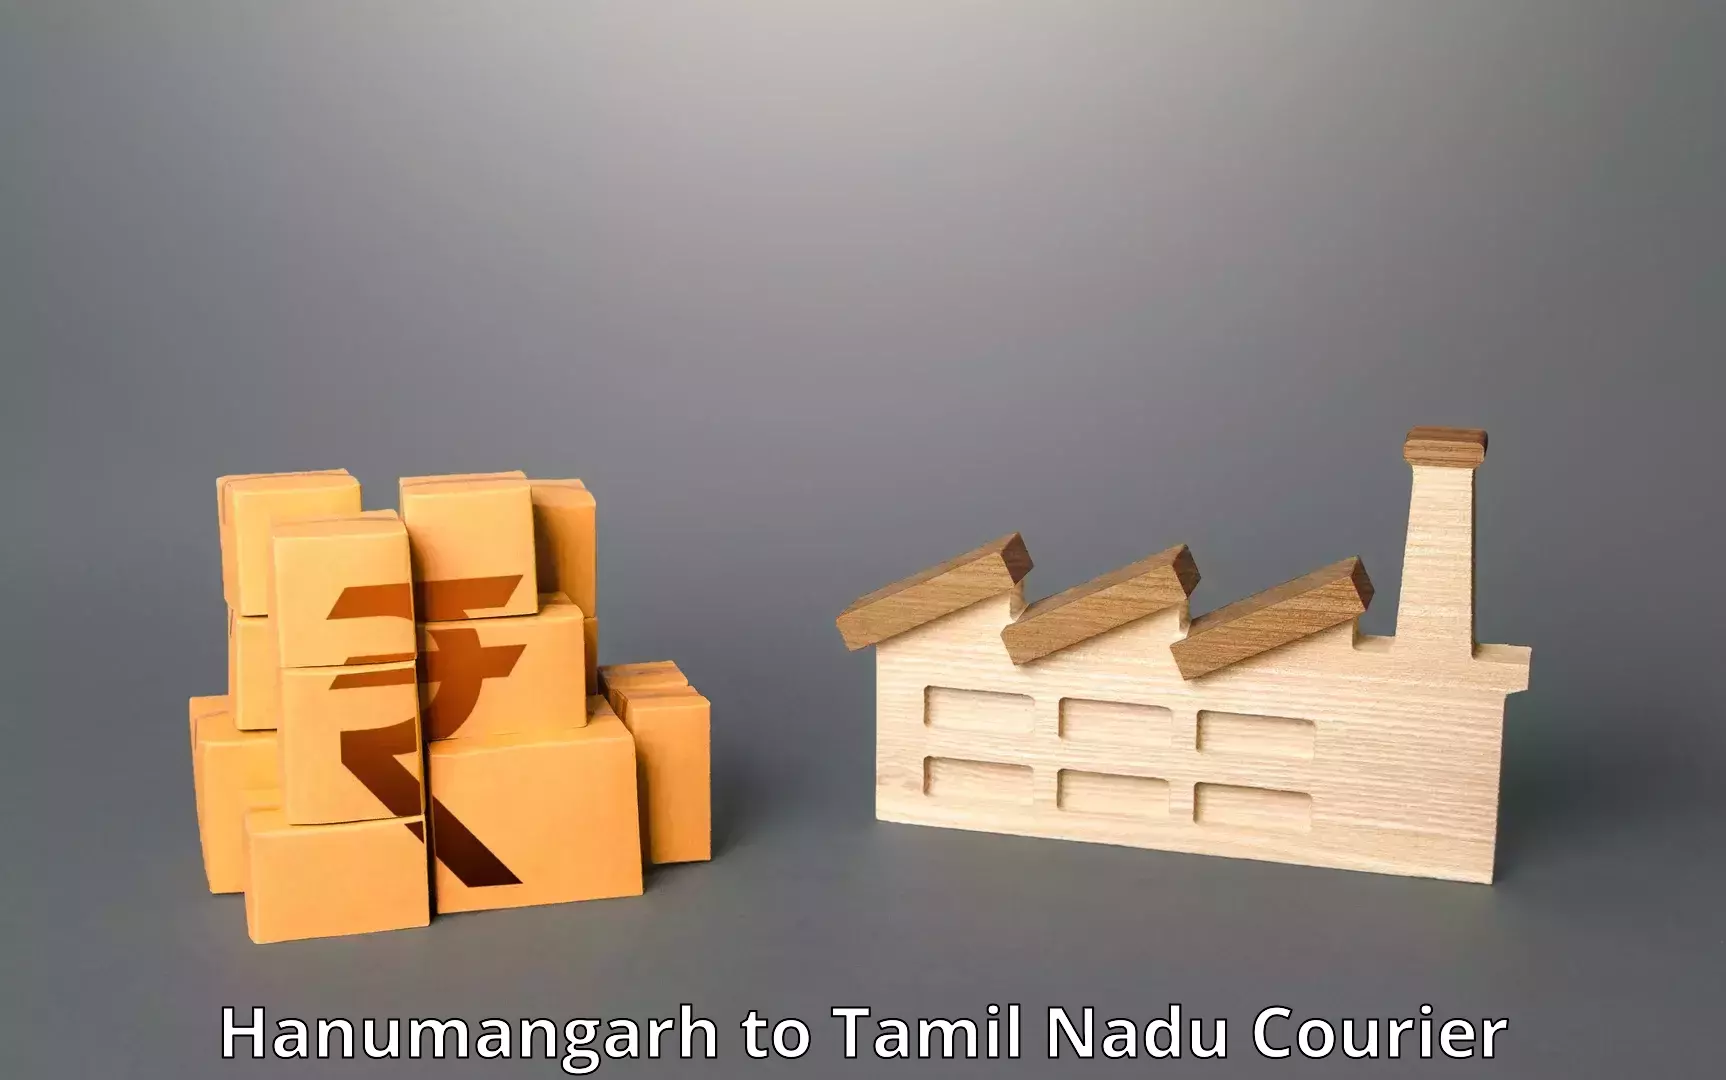 Nationwide delivery network Hanumangarh to Tamil Nadu